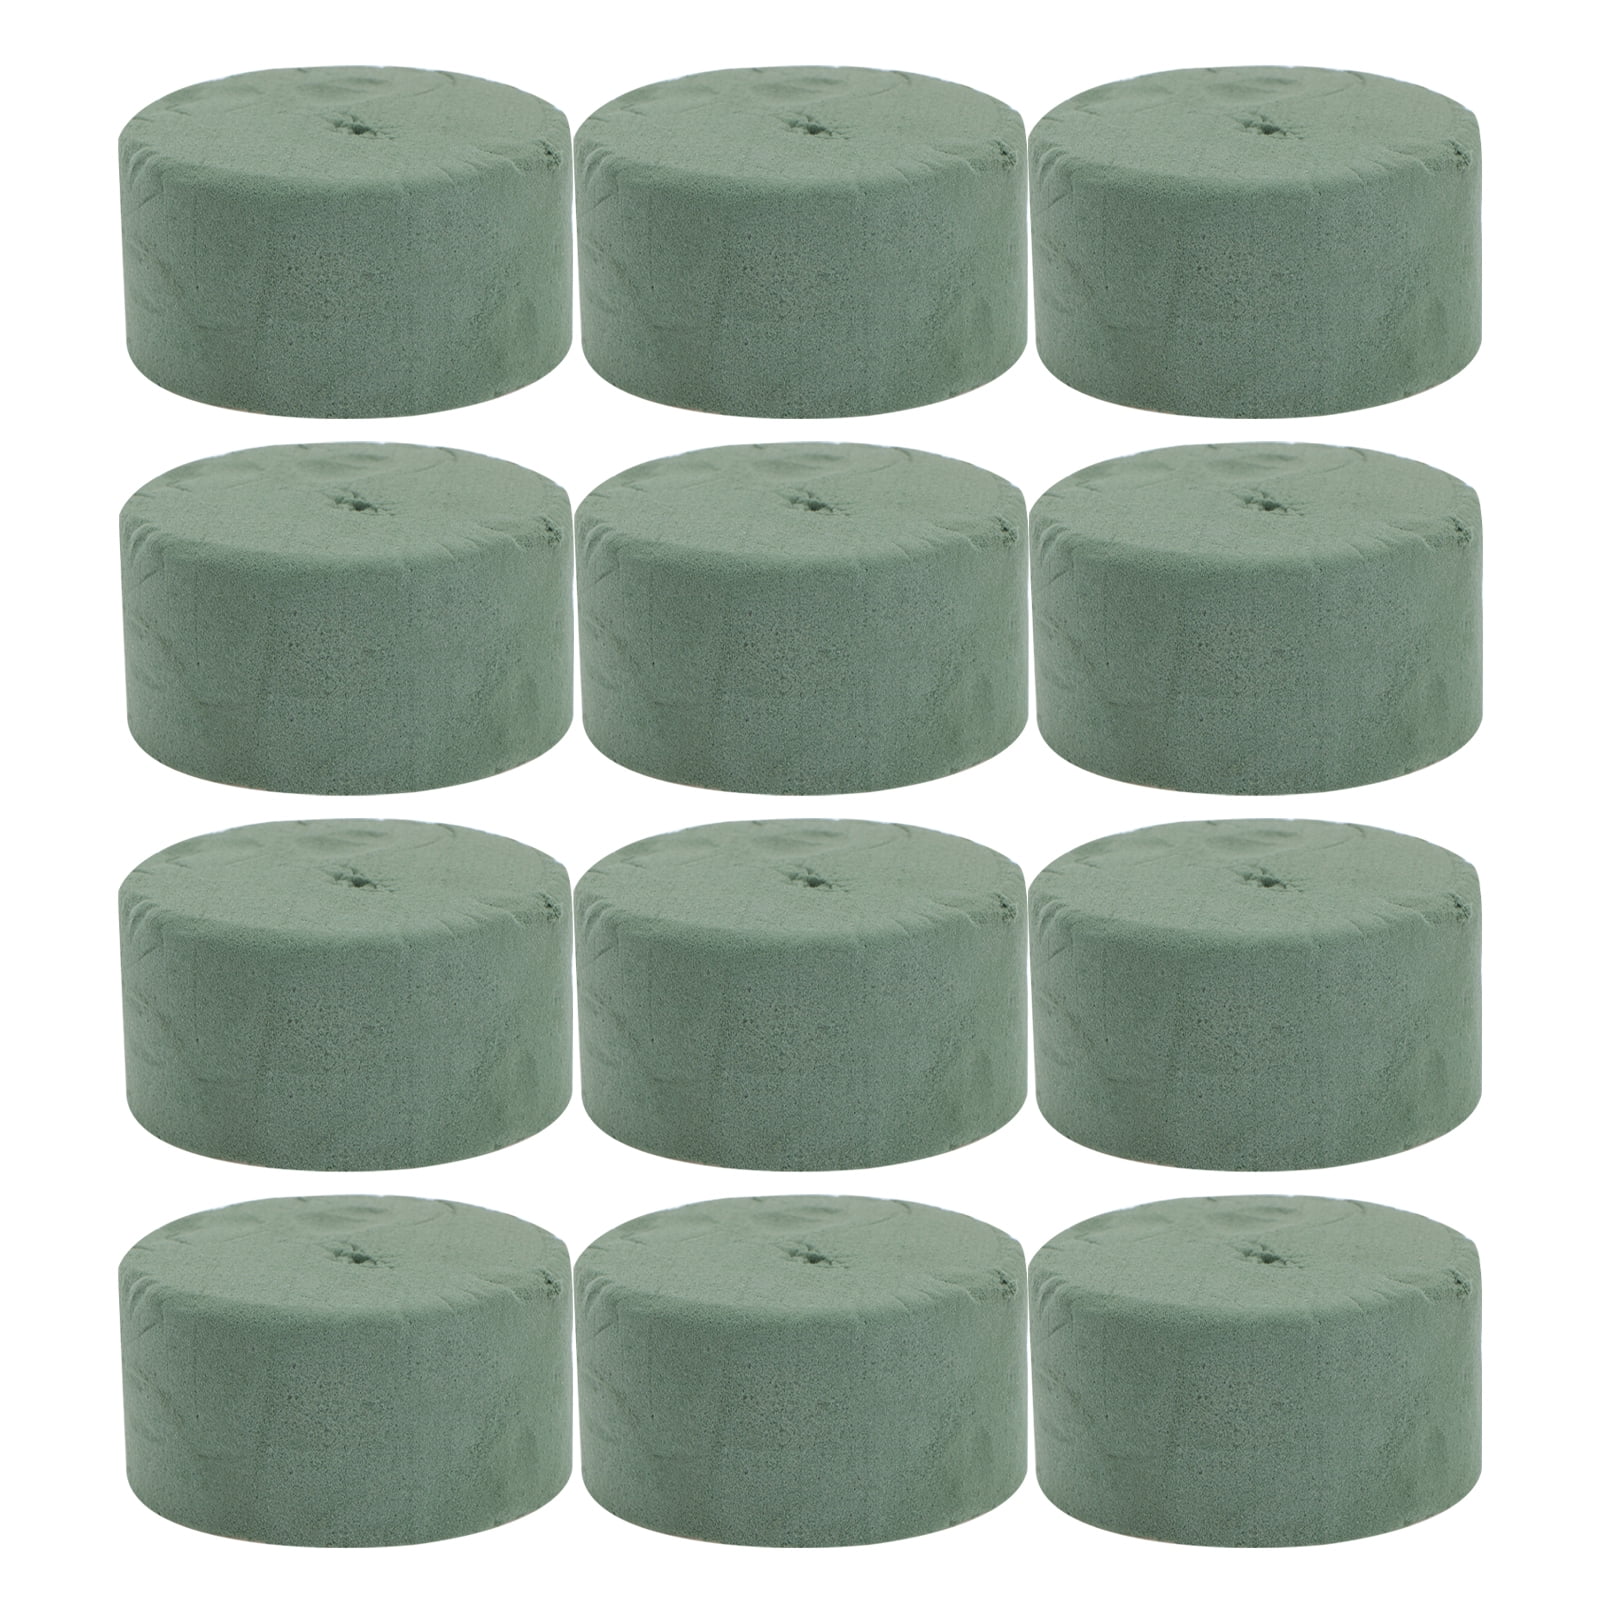 FloraCraft Styrofoam Cones, 6 x 3, 2/Pkg.